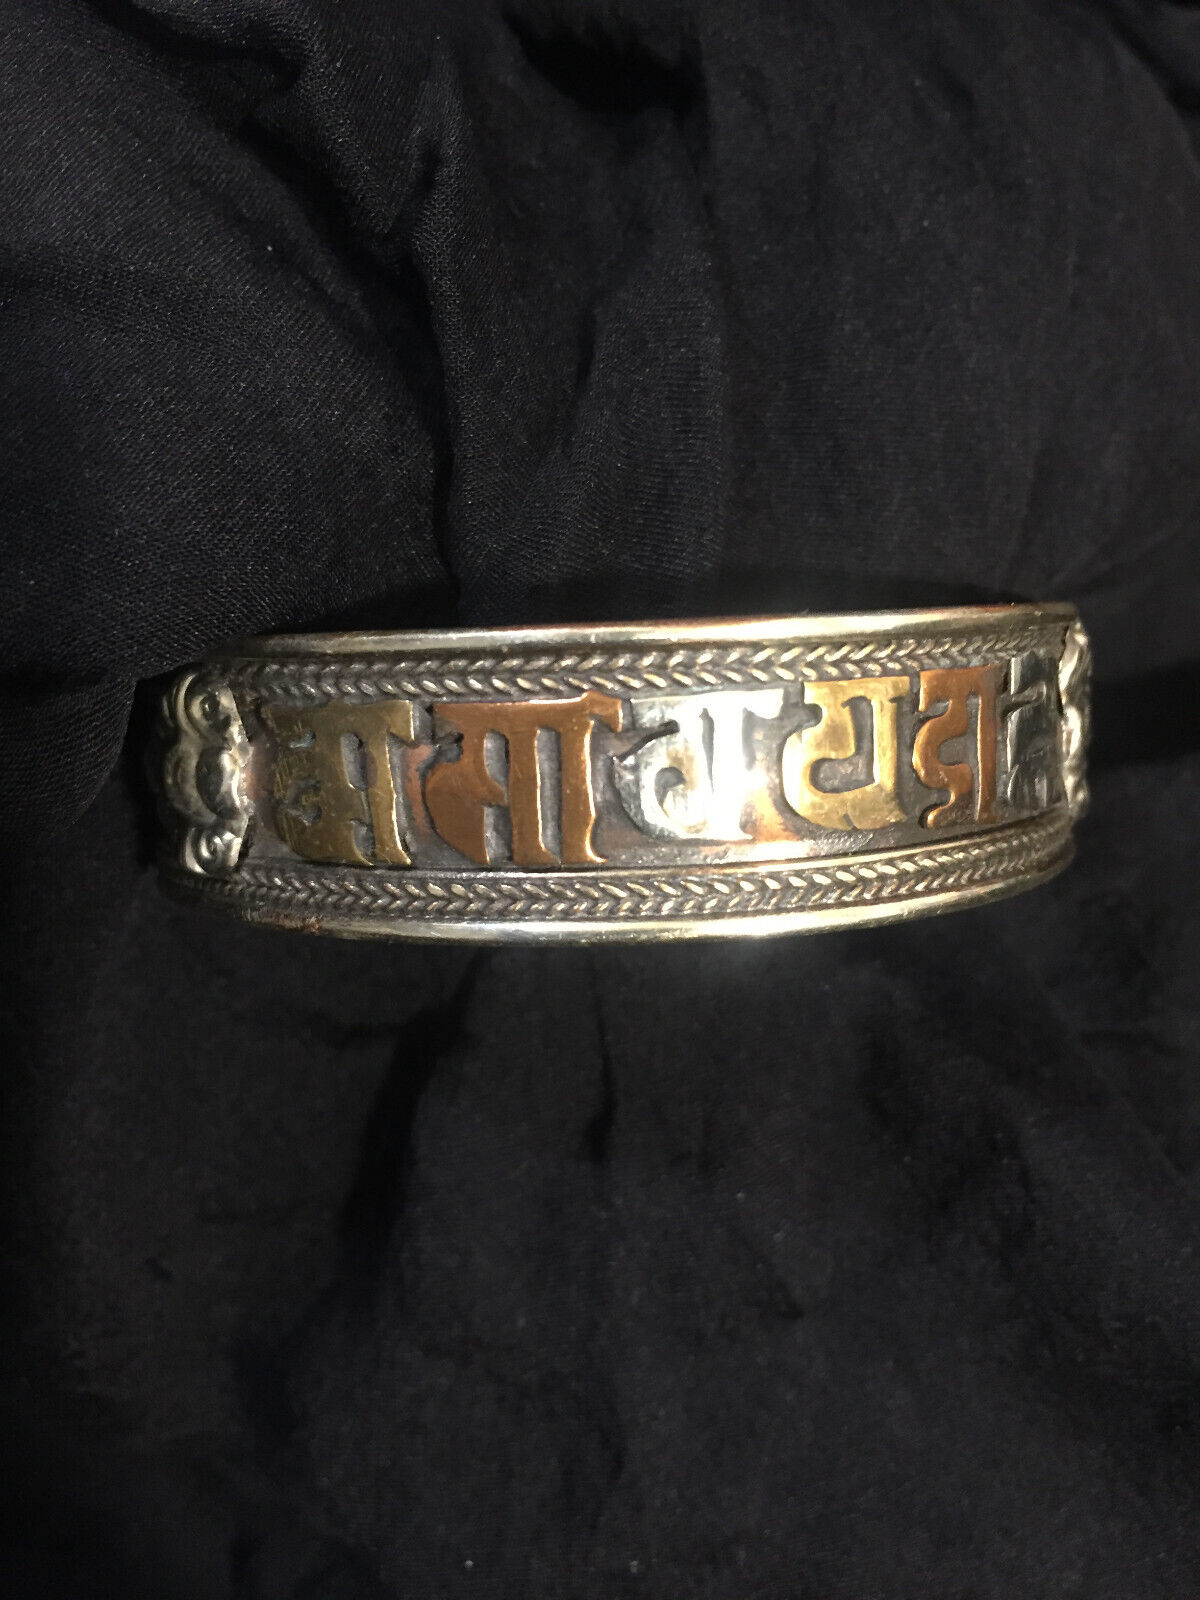 Mantra bracelet cuff Nepal India Mixed Metal Om Mani Padme Hum Buddhist Yoga